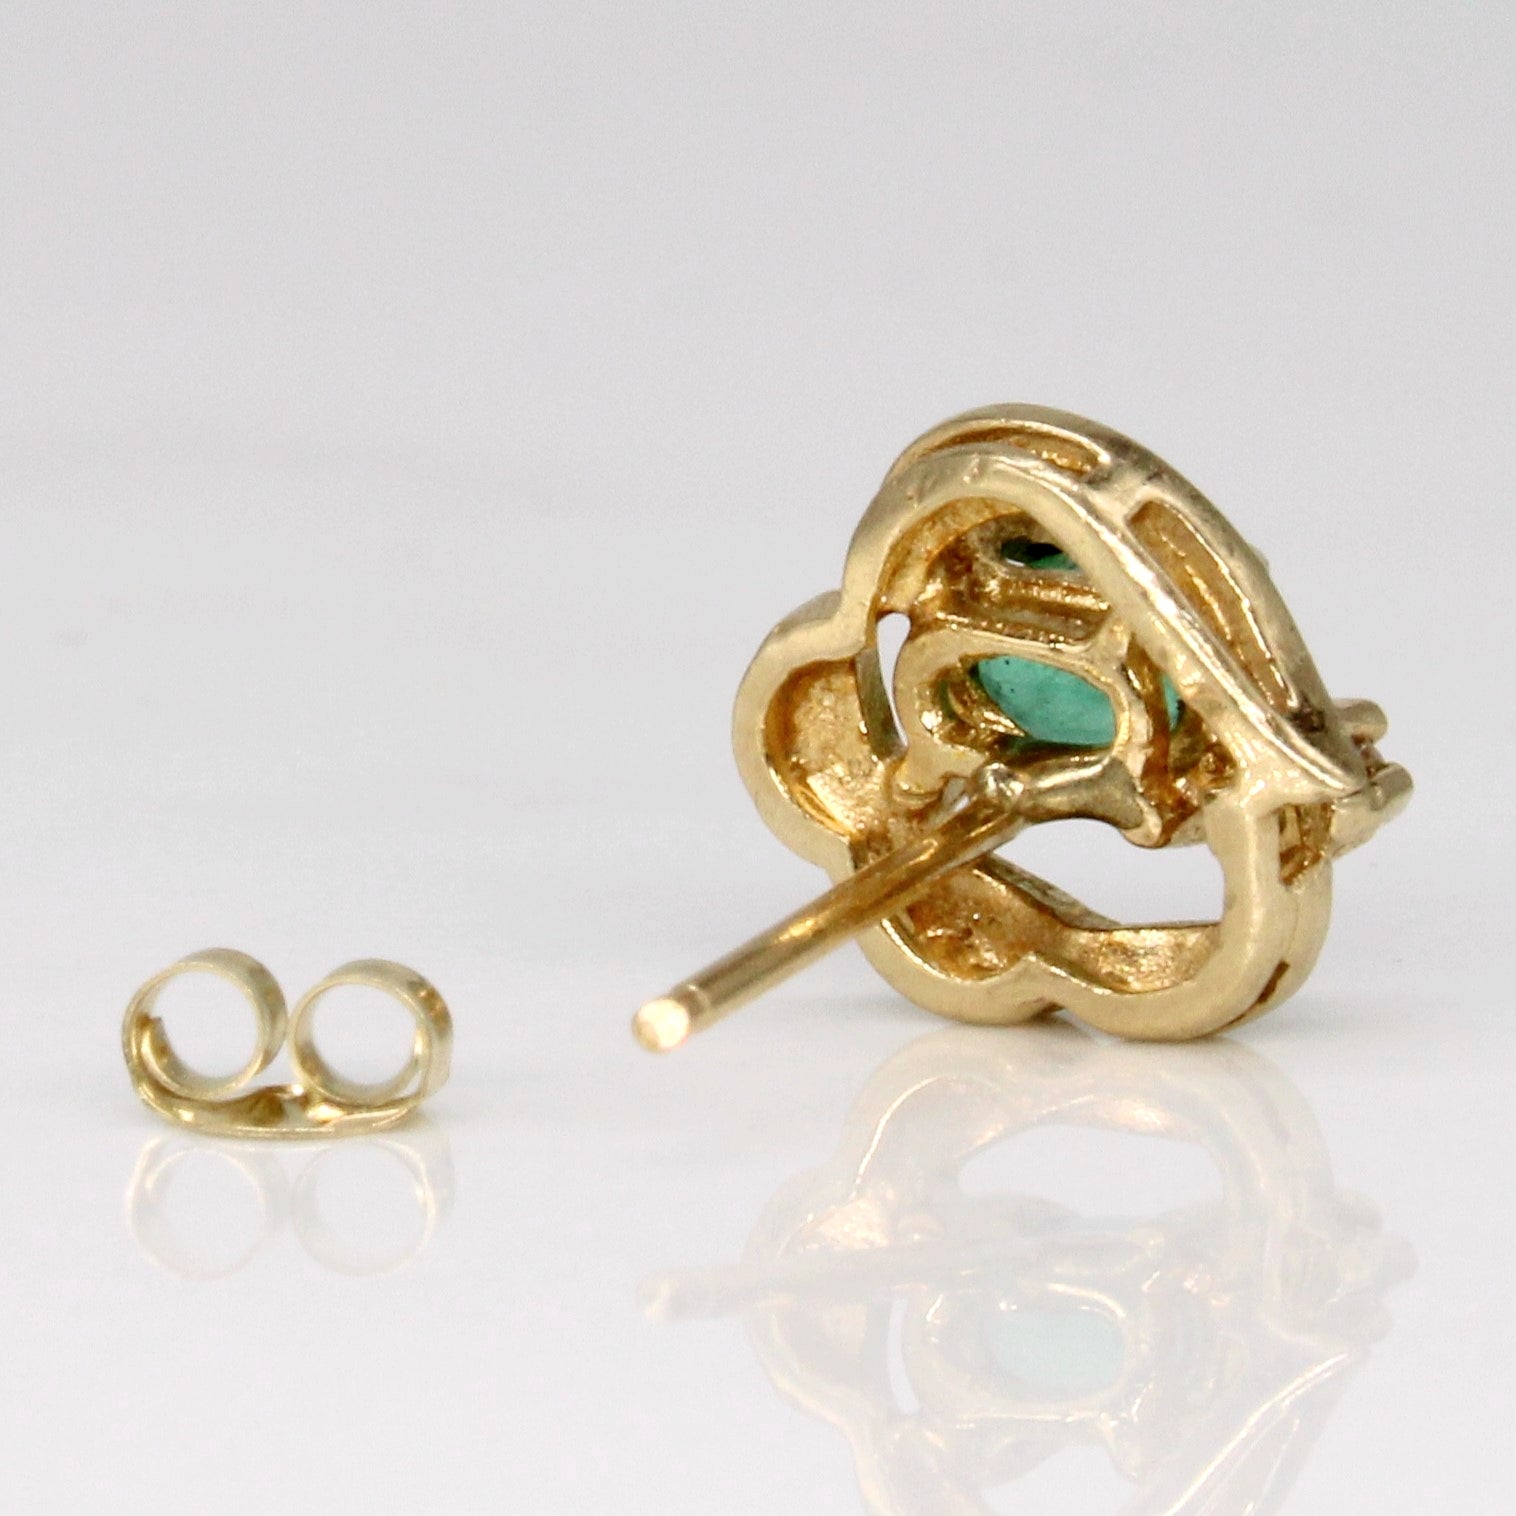 Emerald & Diamond Earrings | 0.30ctw, 0.02ctw |